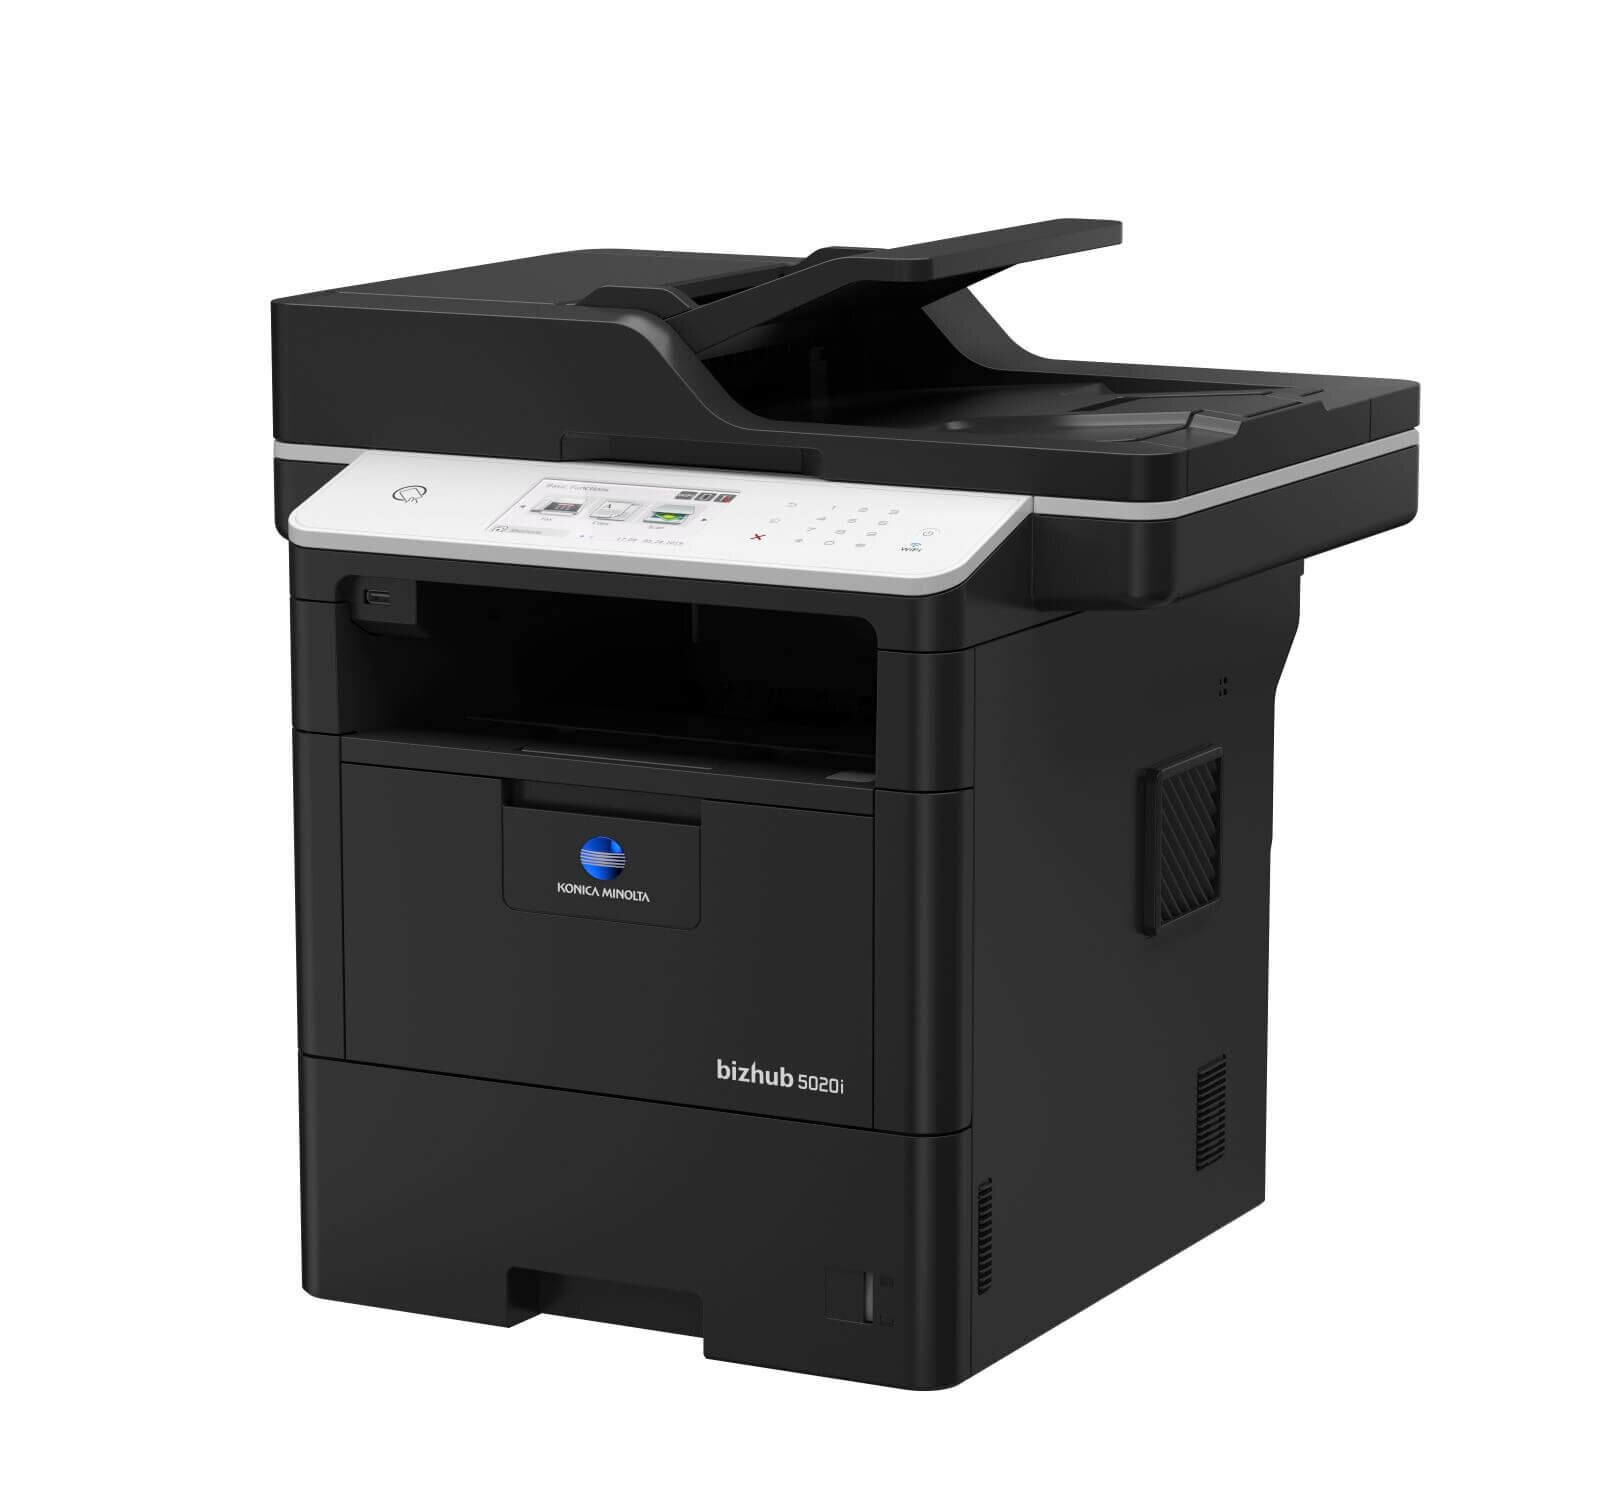 Bizhub 5020i Multifunctional Office Printer Konica Minolta